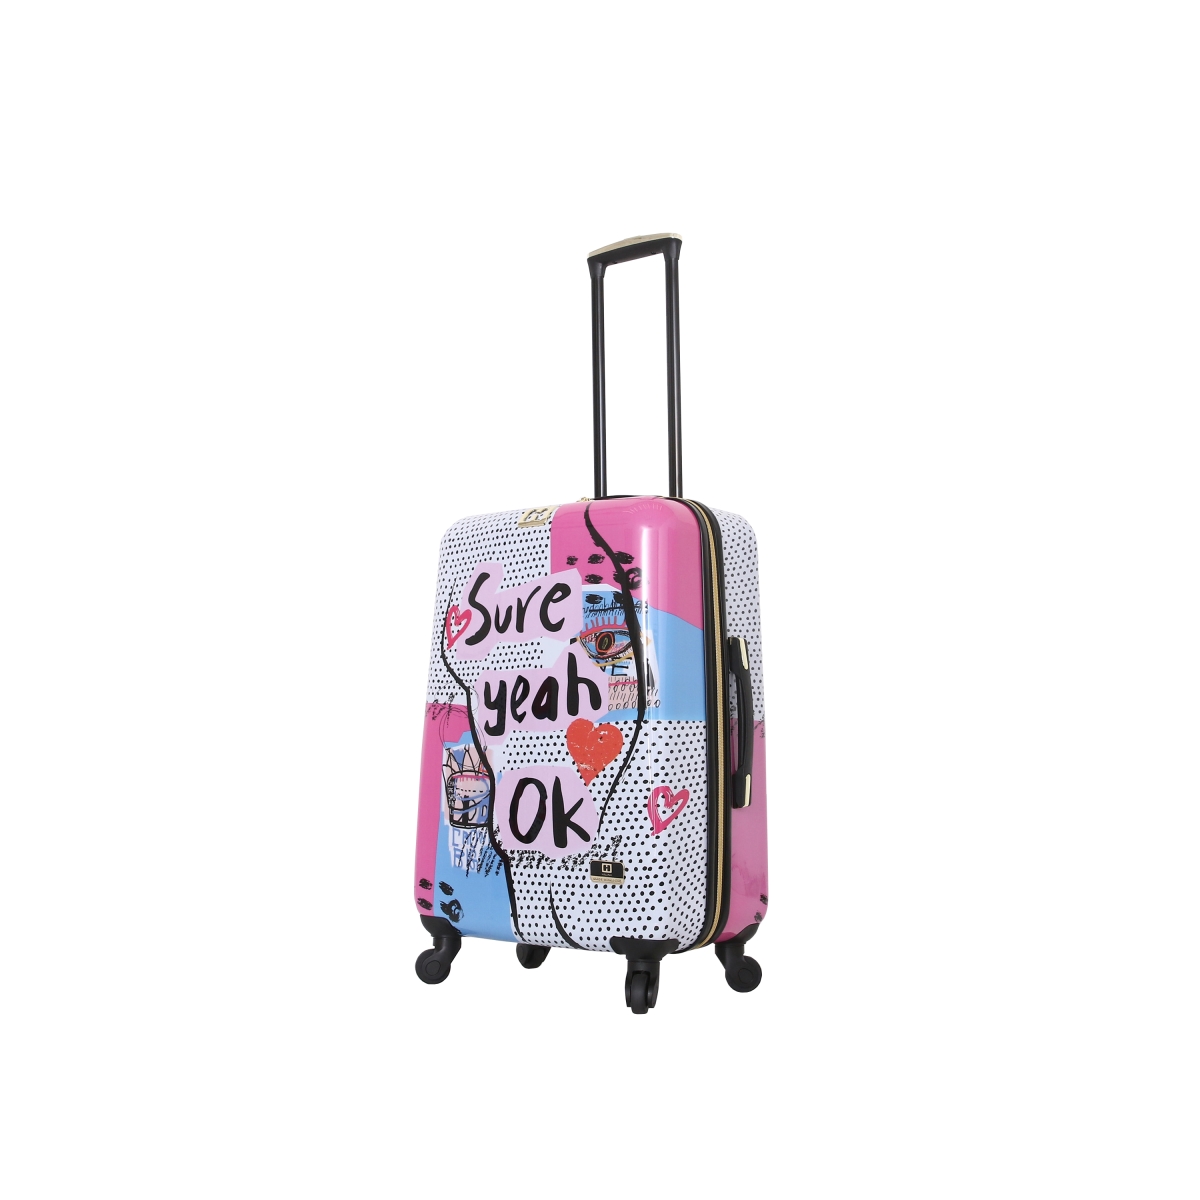 H1009-24-nsunn 24 In. Nikki Chu Sure Cute Luggage, Multicolor